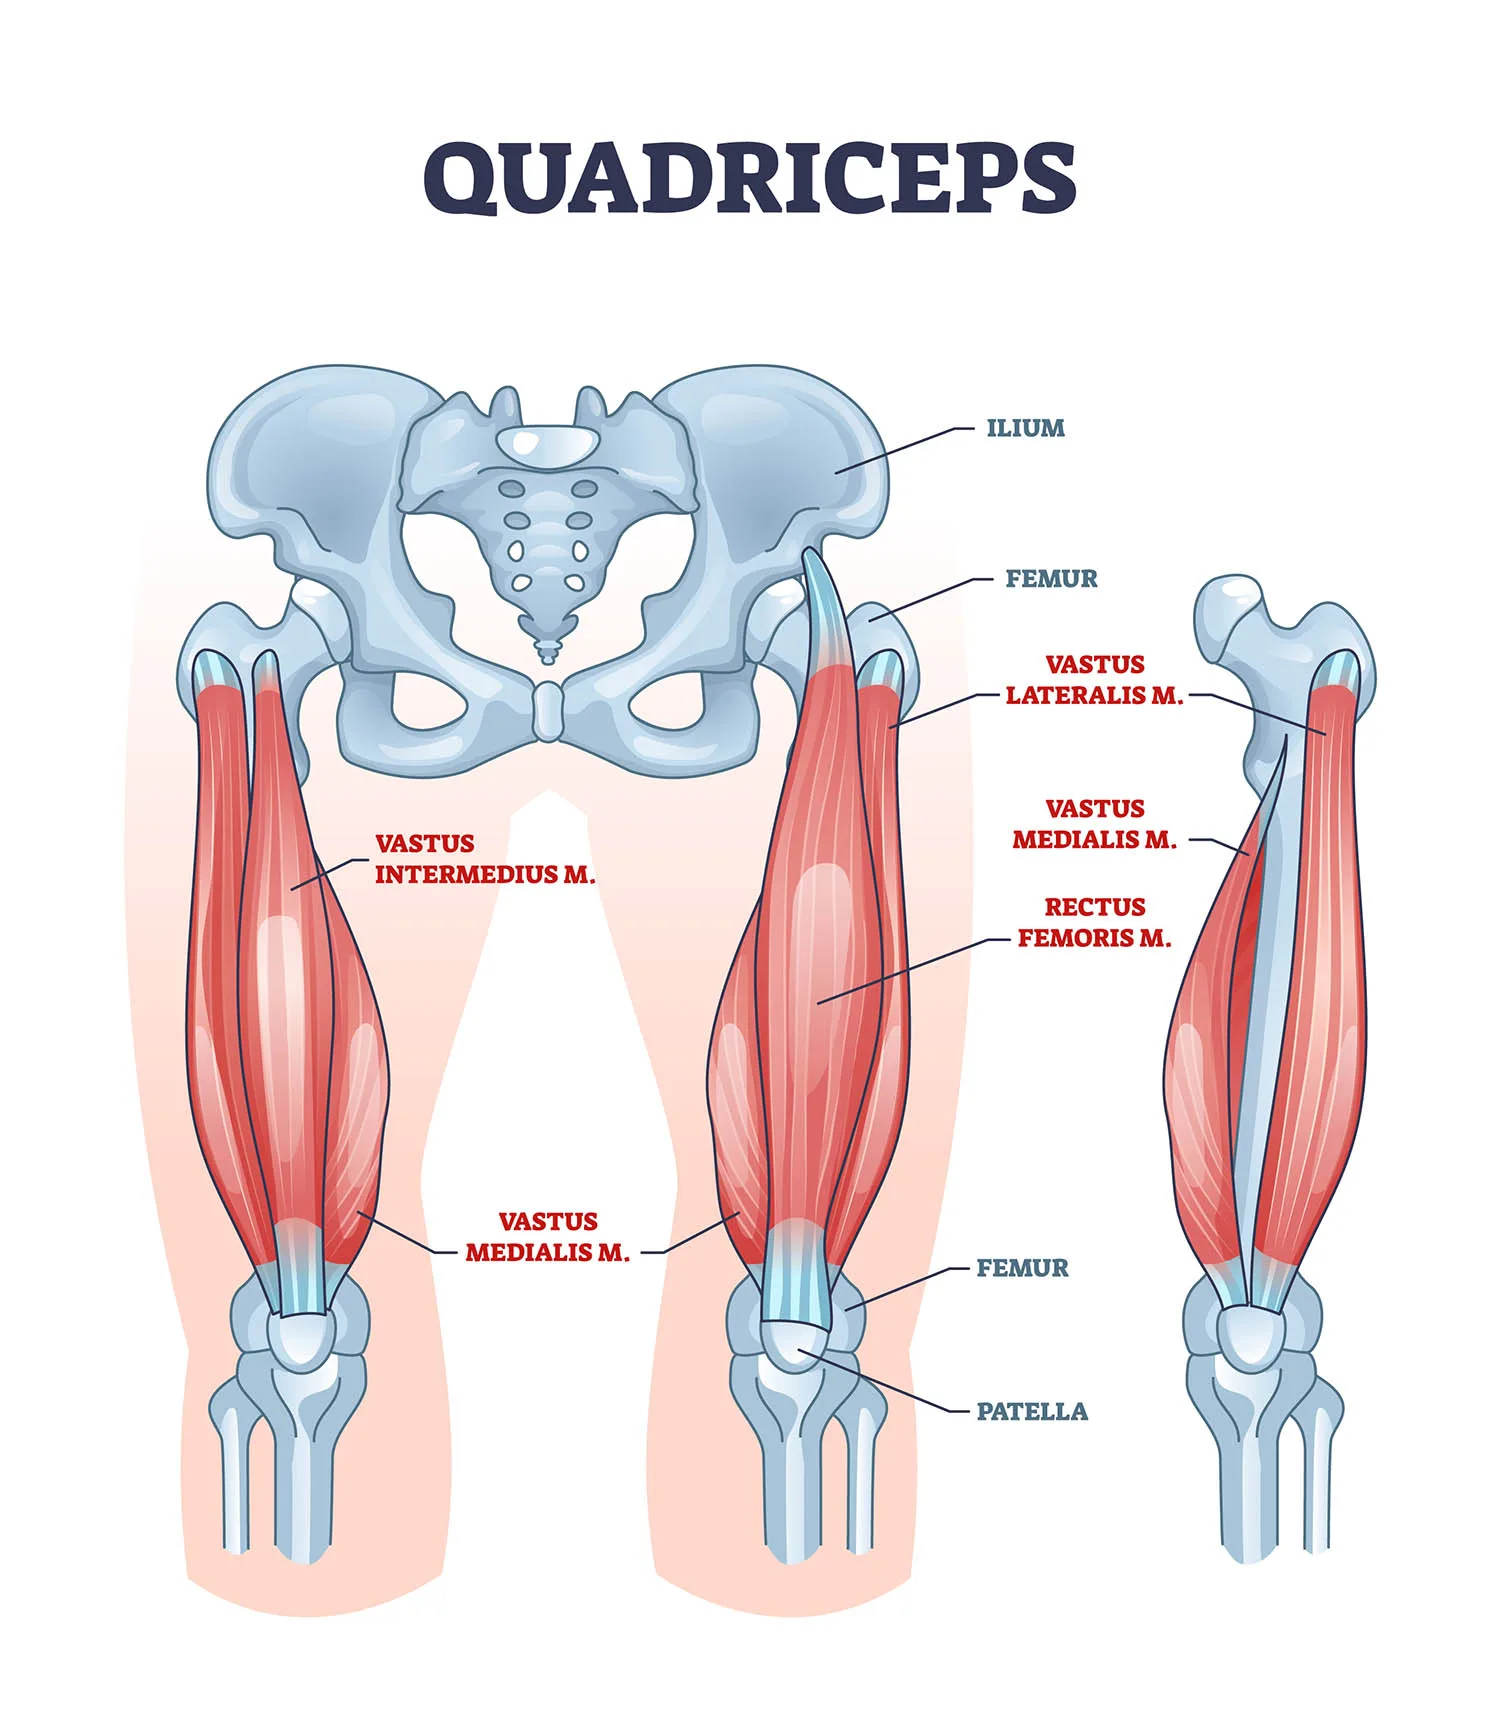 Quadriceps muscle and quads leg muscular or bone anatomy outline diagram. Labeled educational medical scheme with vastus intermedius, medialis, lateralis or rectus femoris location vector illustration